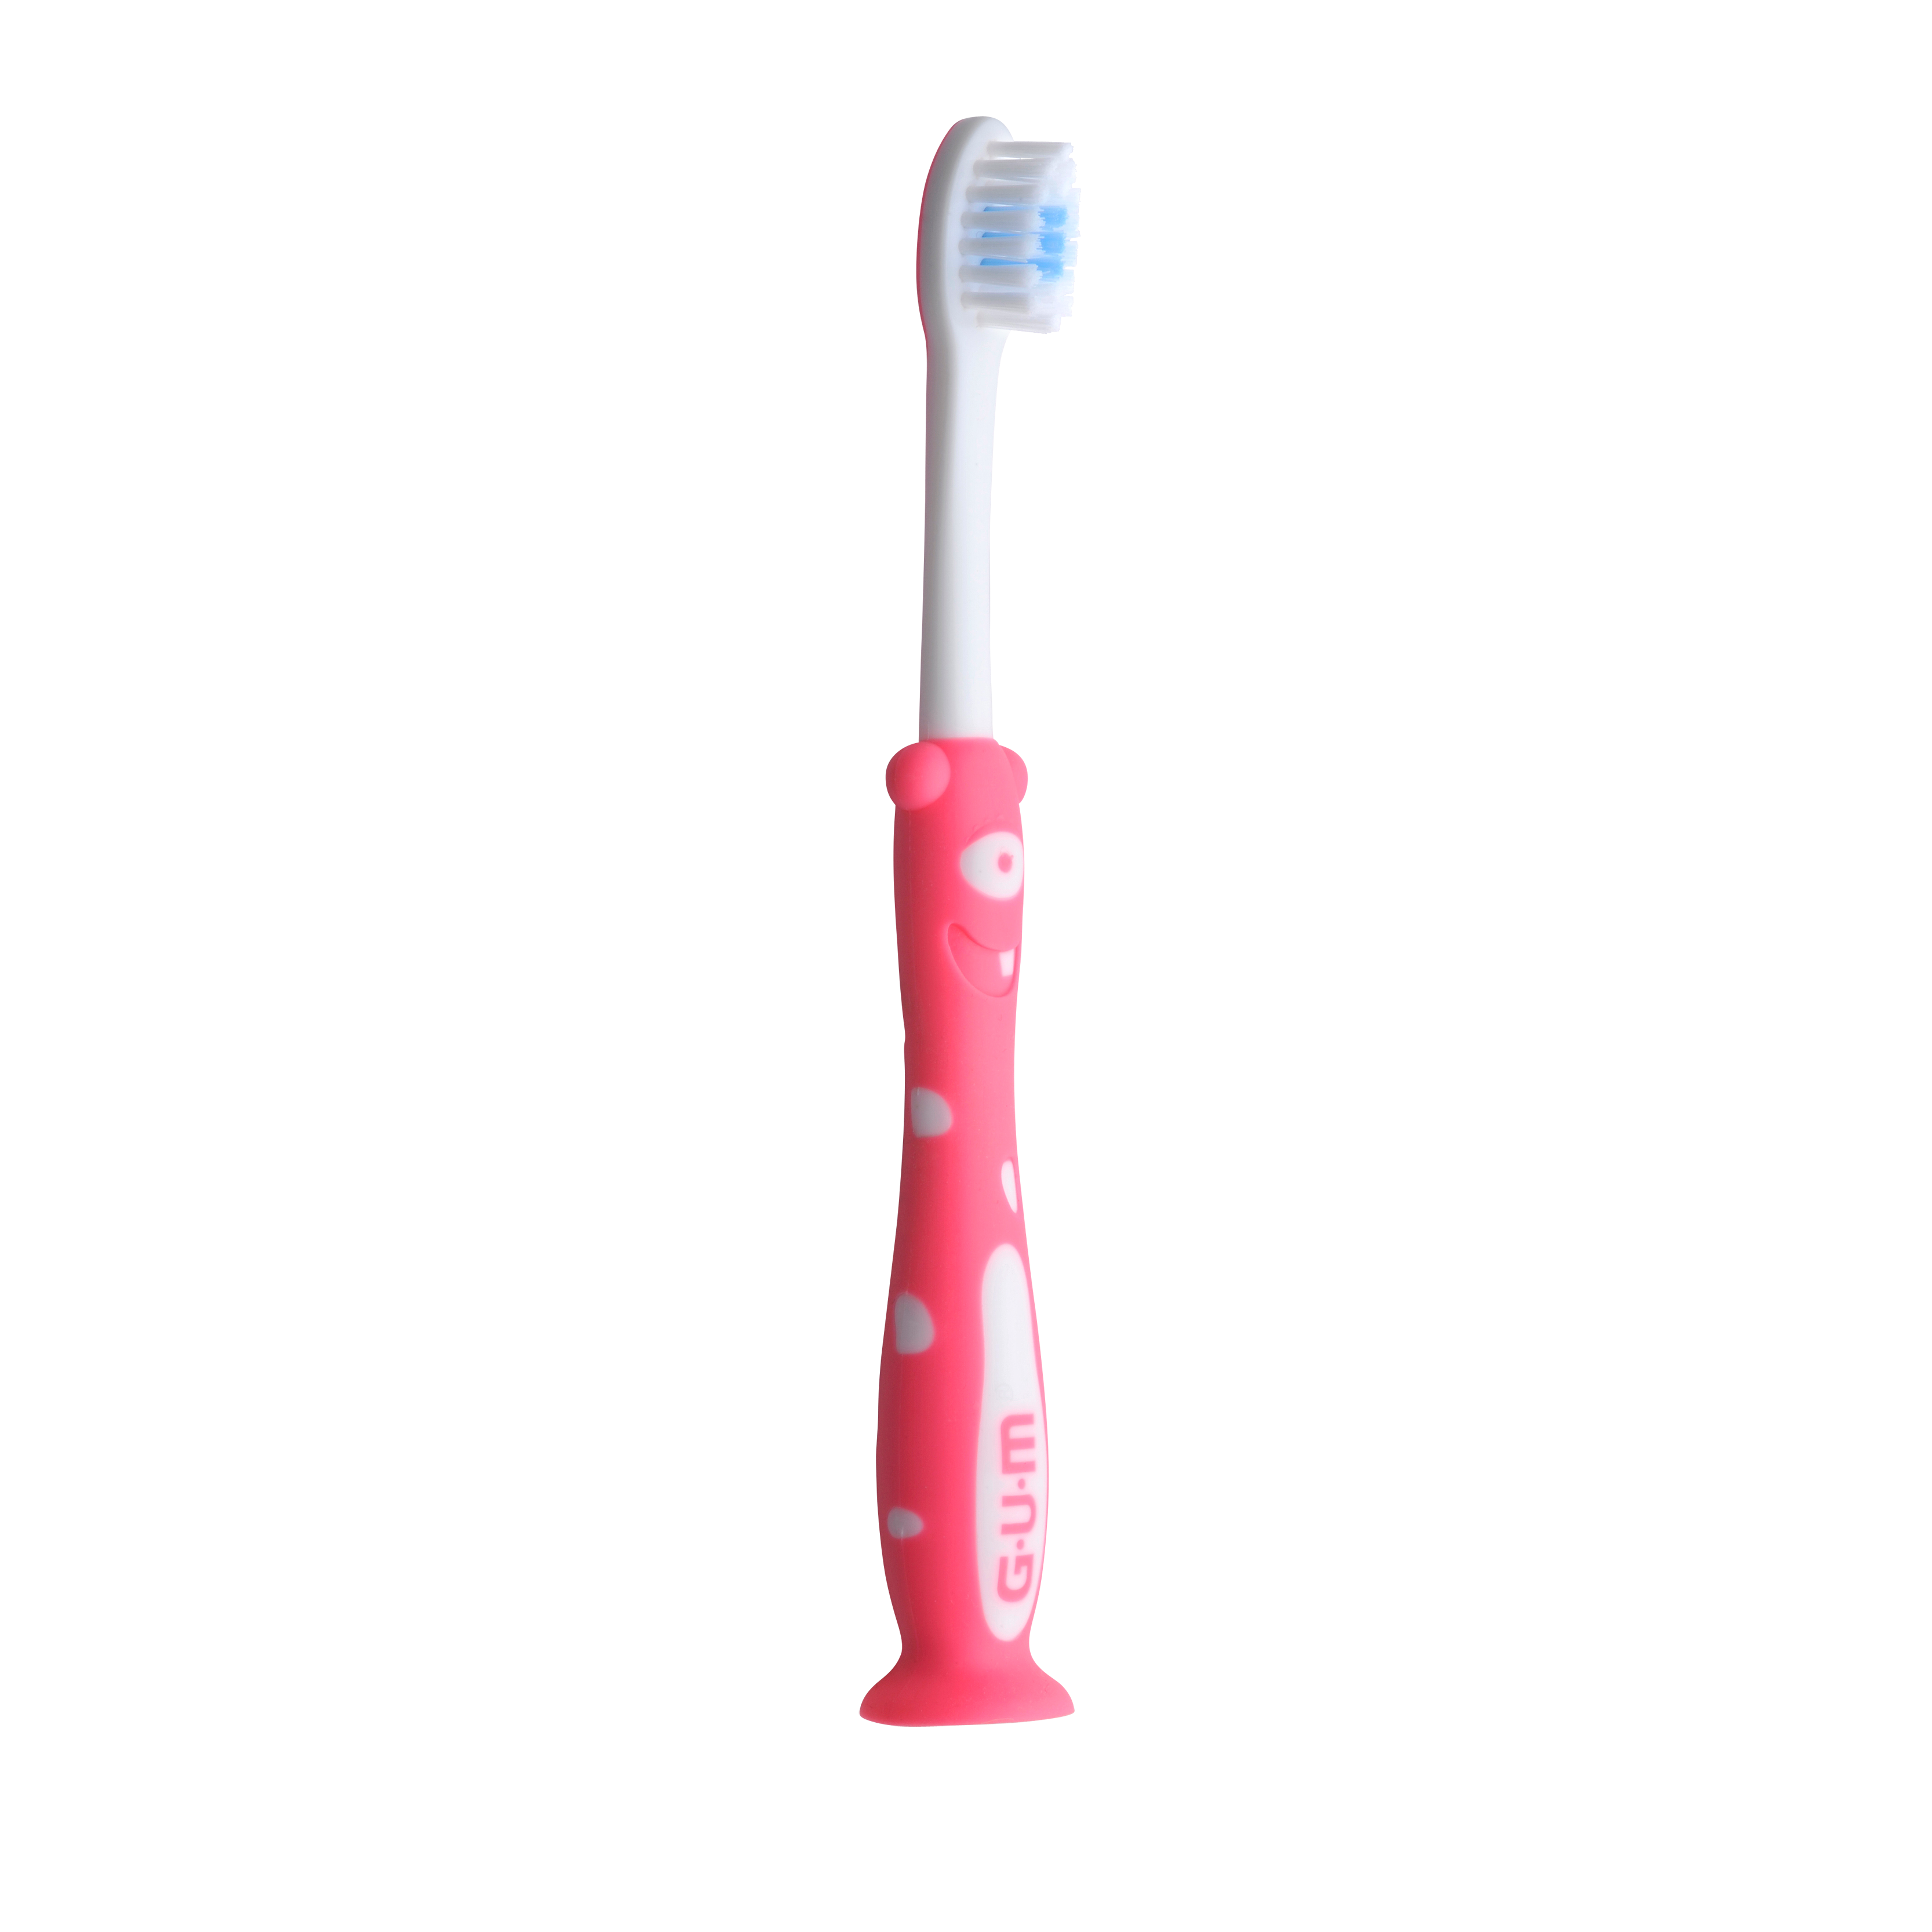 GUM KIDS Toothbrush | For Children Aged 2-6 | Soft Bristles